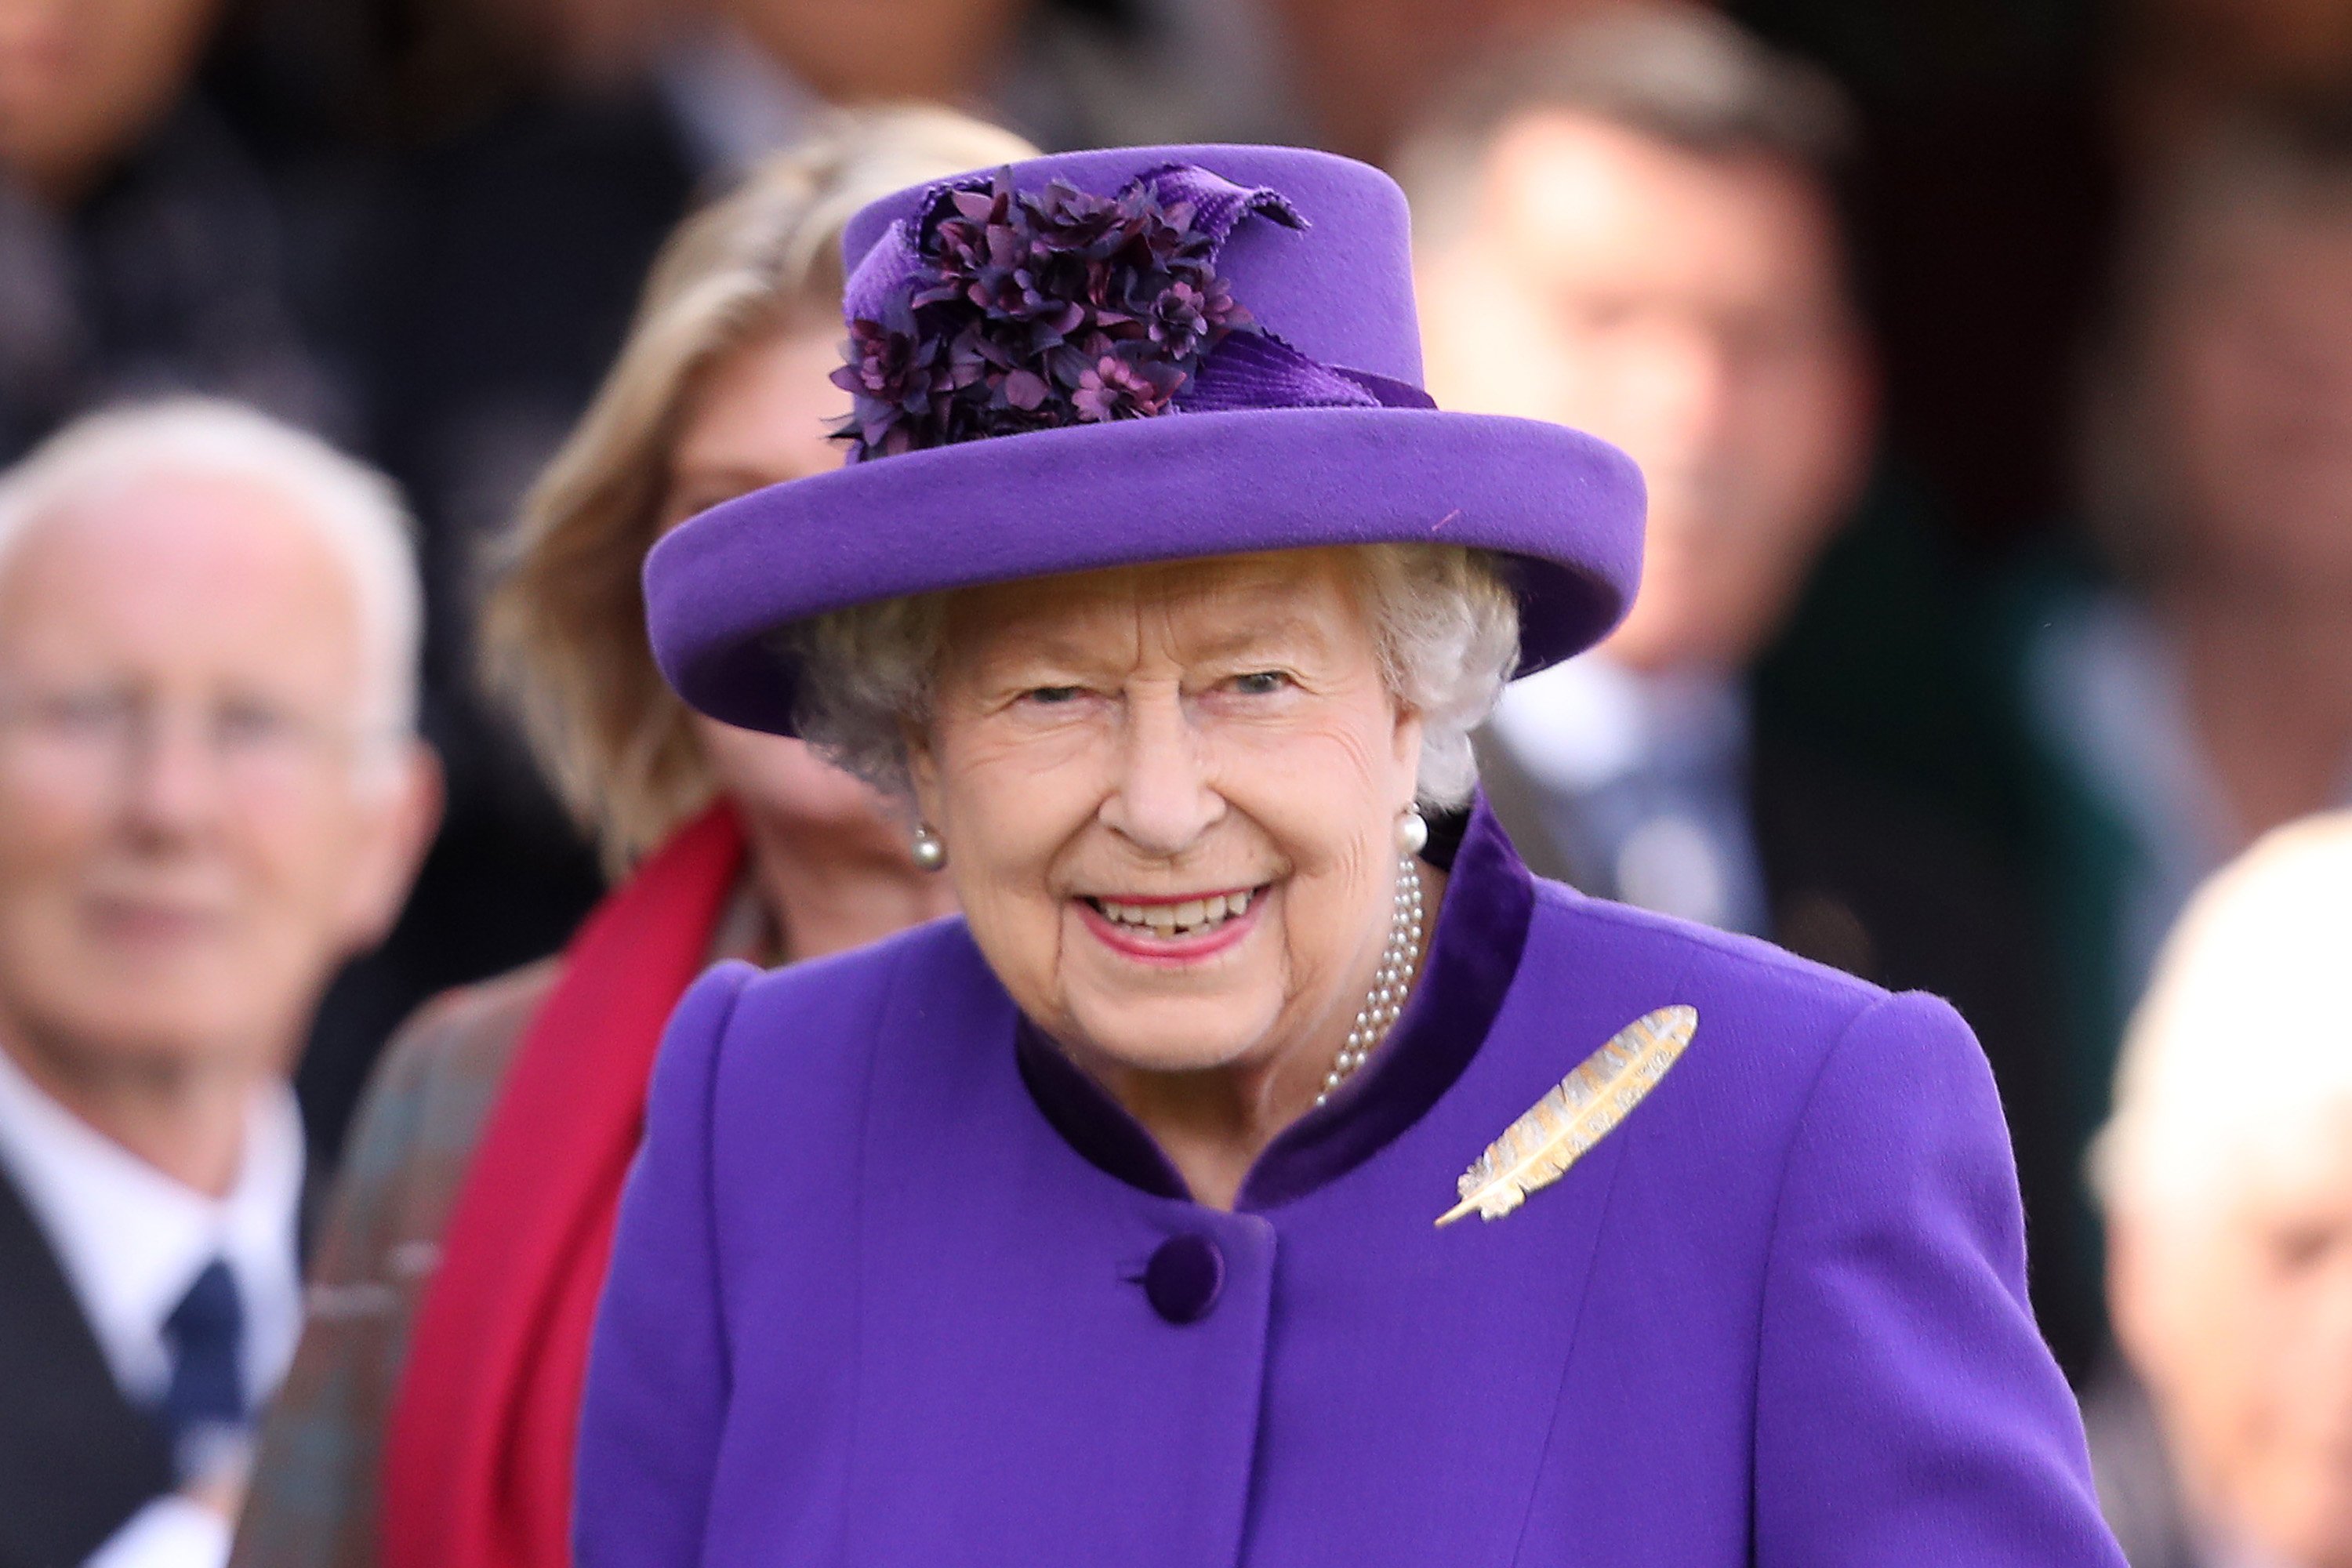 Queen Elizabeth II attends the Braemar Highland Games in Braemar, Scotland on September 7, 2019 | Photo: Getty Images